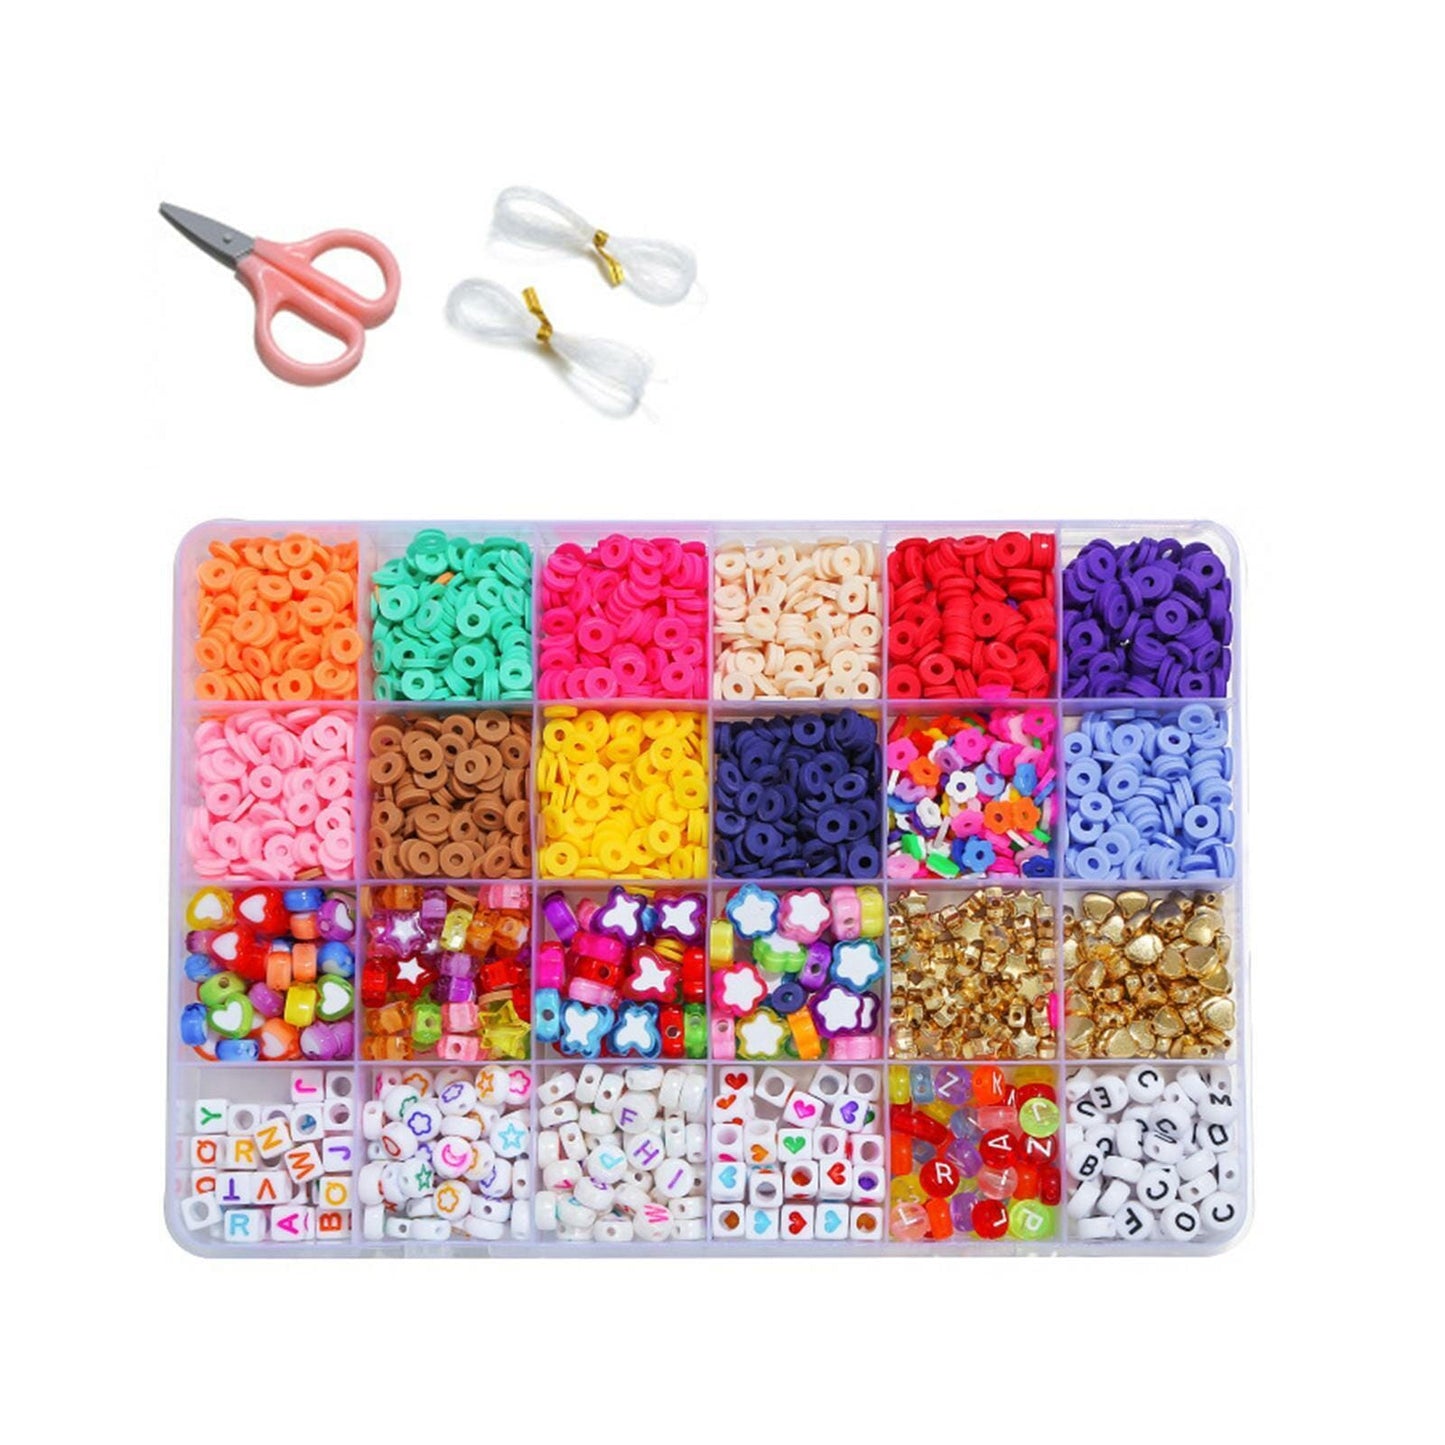 12 Colors 4000pcs DIY Ceramic Loose Bead Set 6mm Flat Round Polymer Clay Beads Jewelry Making Kit